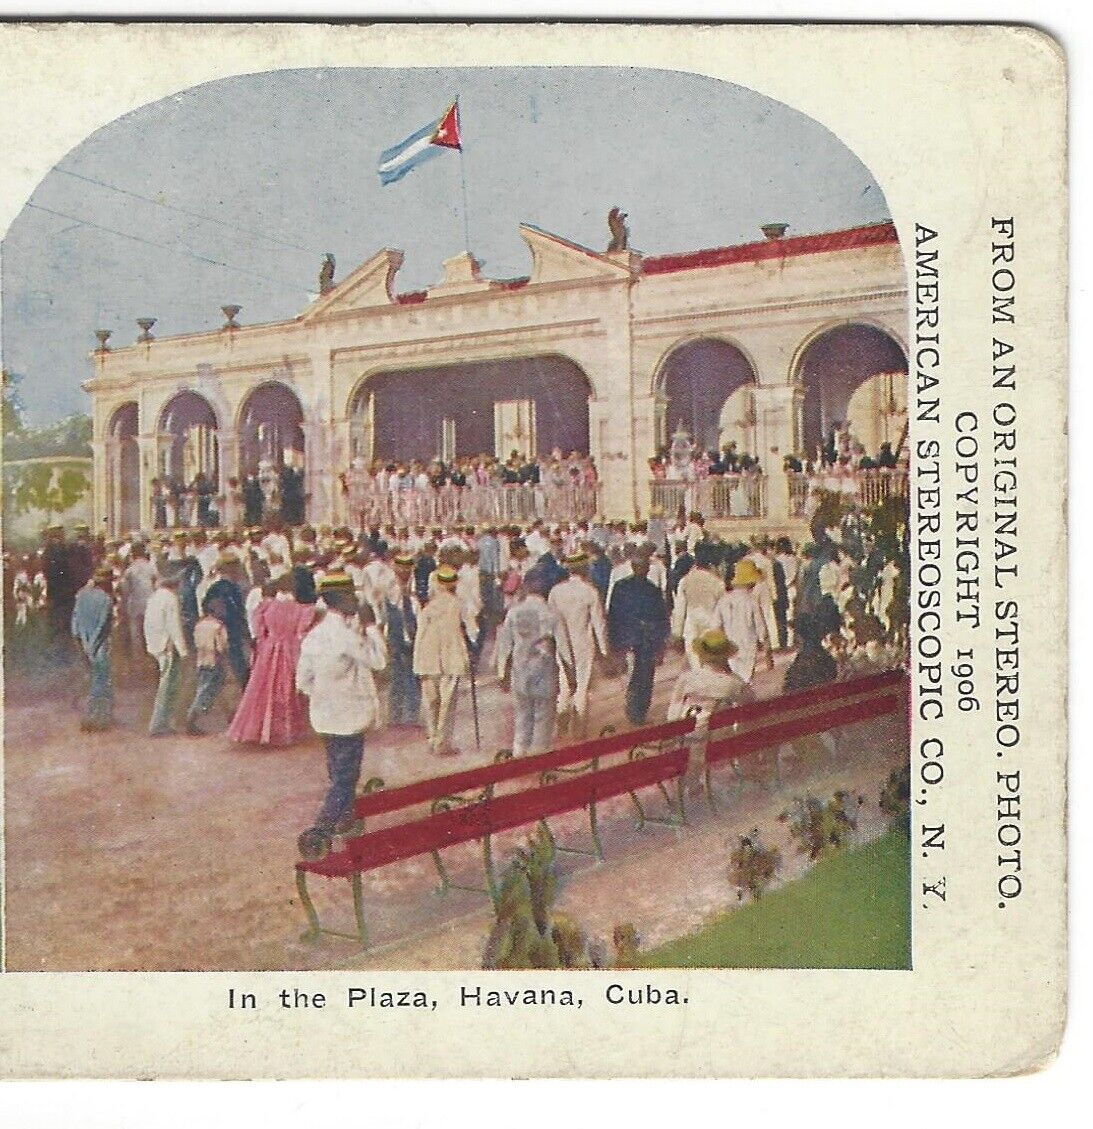 1906 Crowd In the Plaza Havana, Cuba, Quaker Oats Stereoview Card